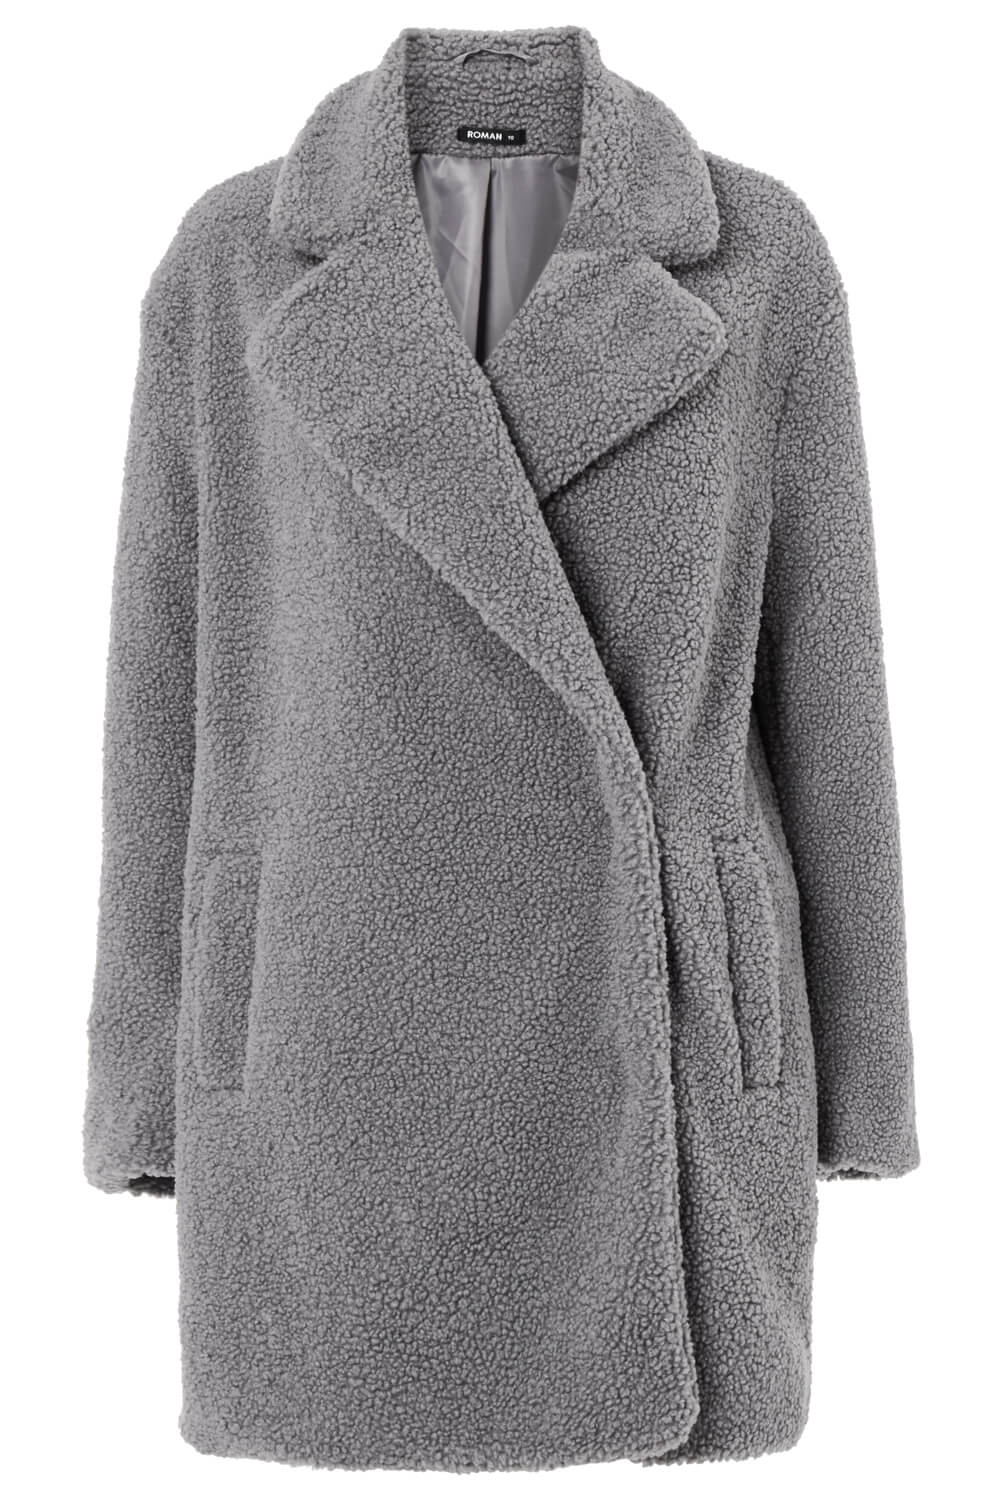 Longline Soft Faux Fur Teddy Coat in Grey - Roman Originals UK